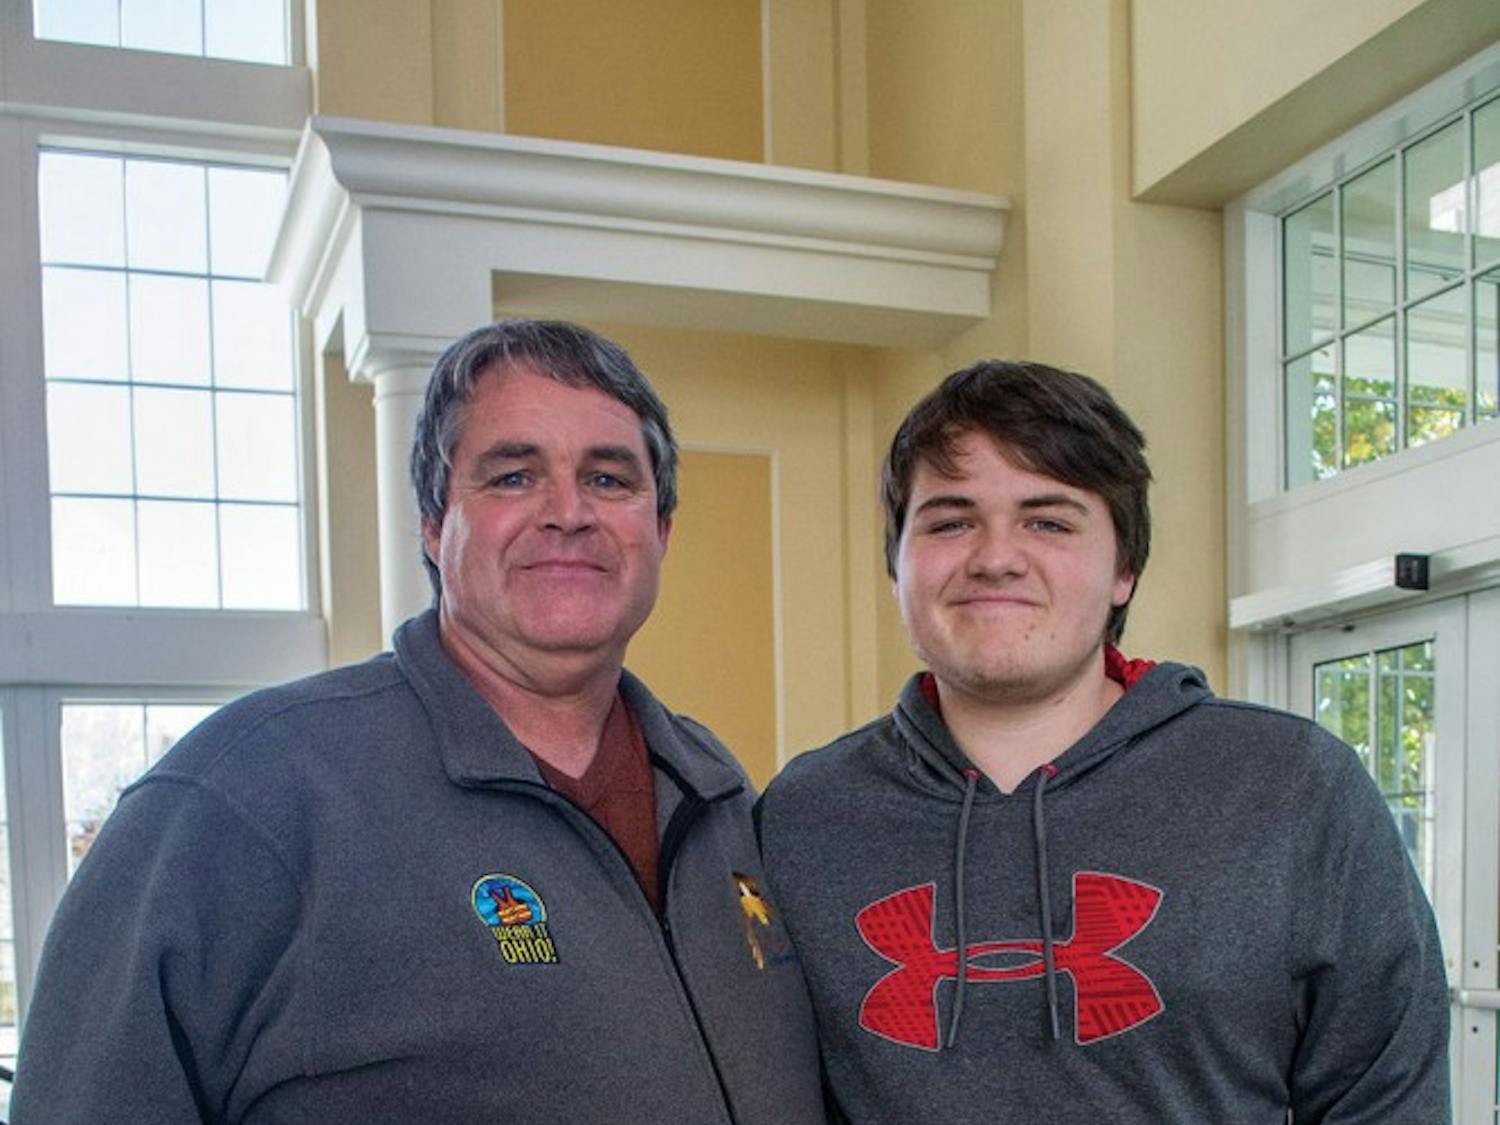 Max Baron, a freshman studying media arts, and his dad, Mike Baron  